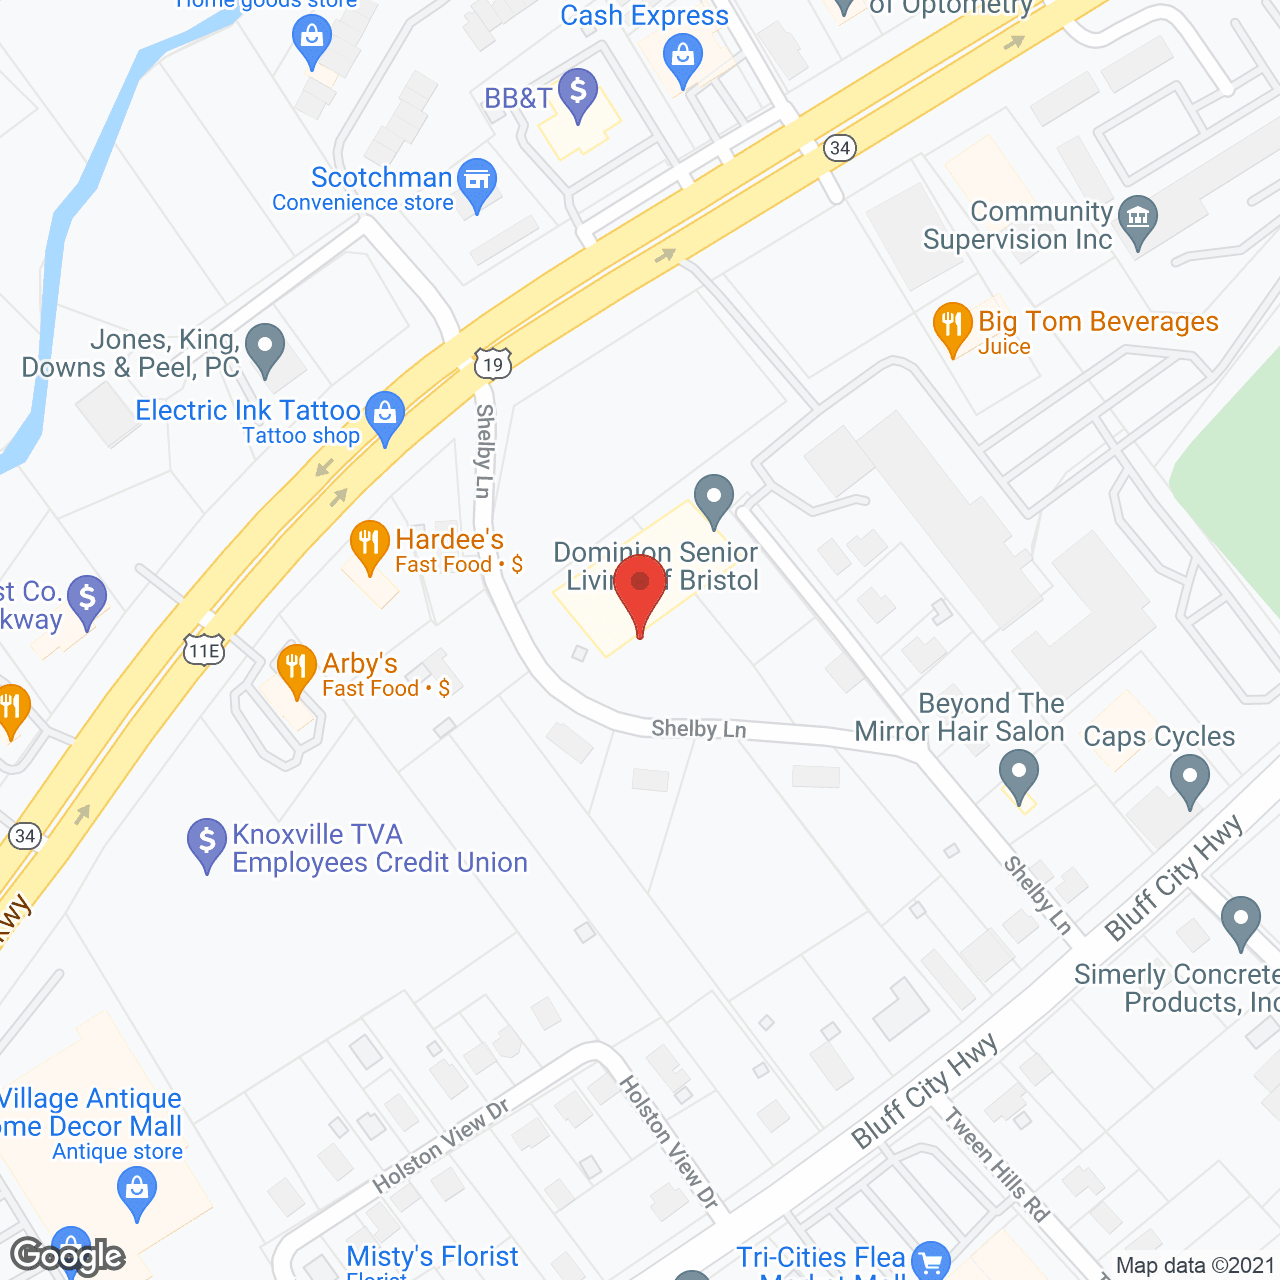 Dominion Senior Living Bristol in google map